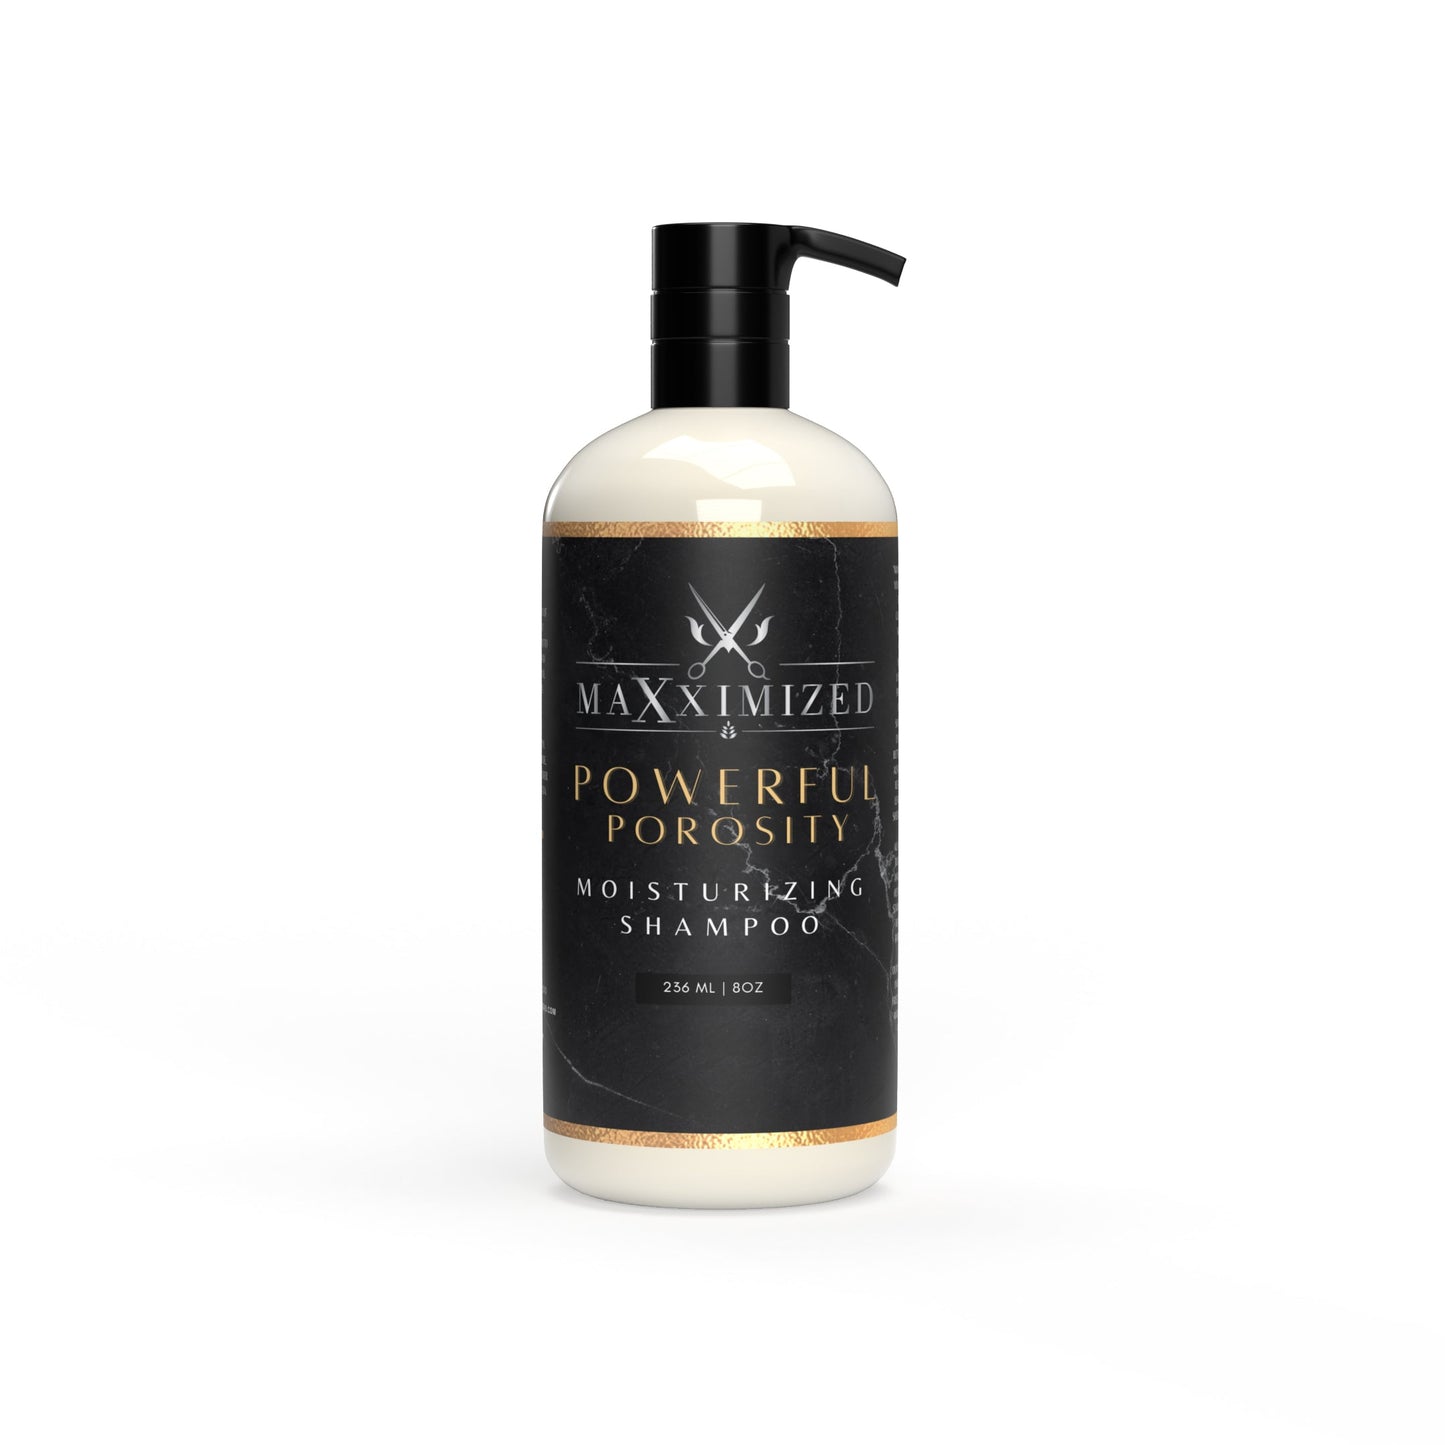 MaXximized Powerful Porosity Moisturizing Shampoo 2